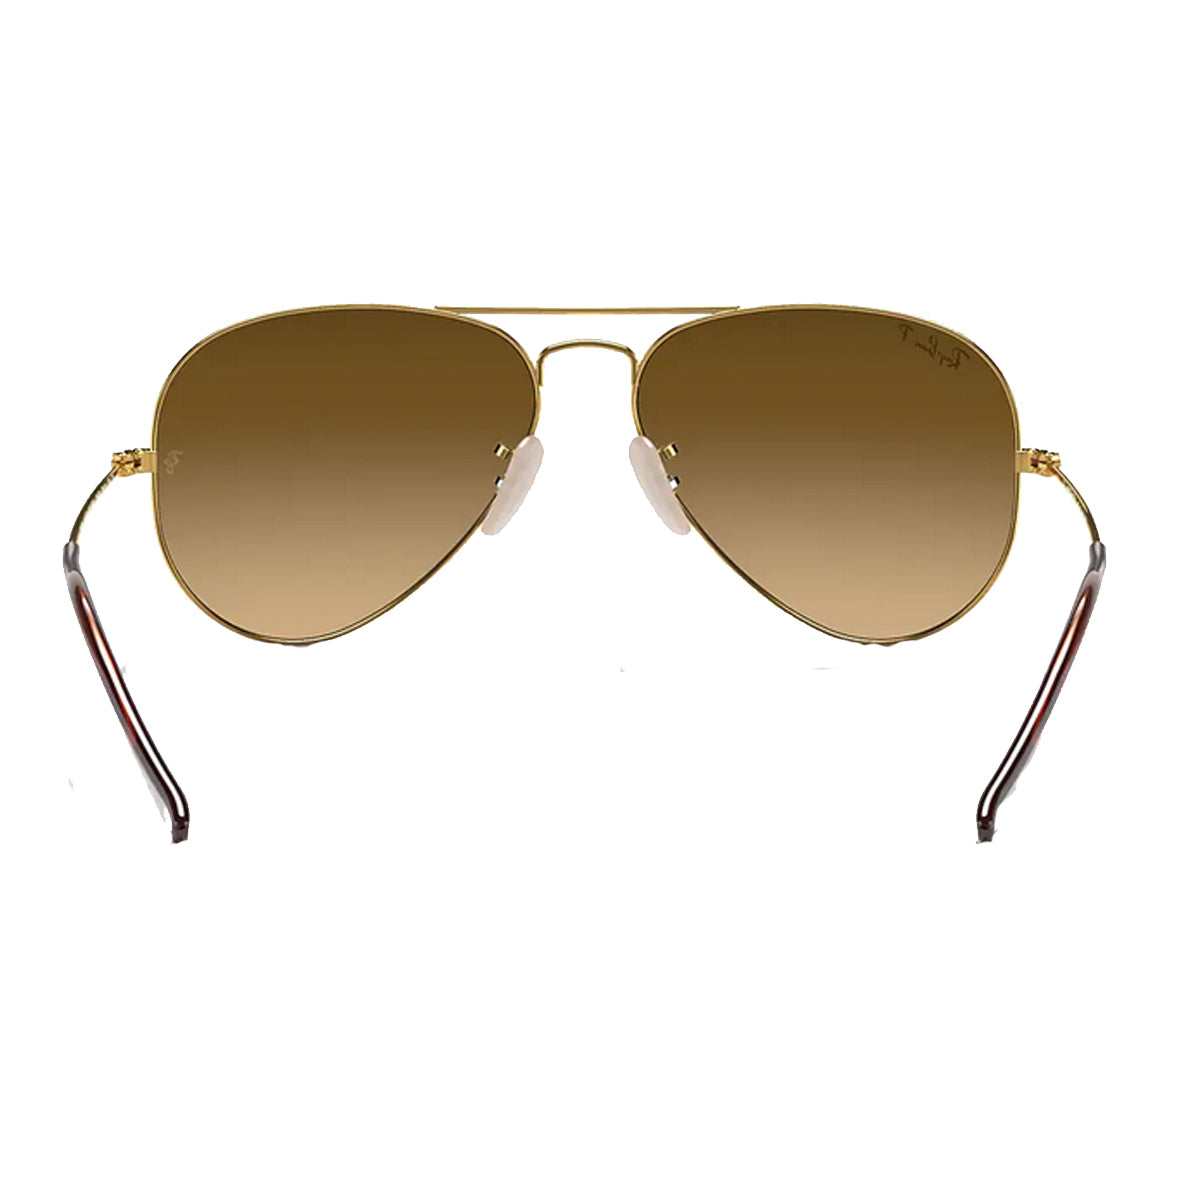 Ray-Ban Brown Gradient Sunglasses Gold Metal Frame | Gradient sunglasses,  Gold sunglasses, Sunglasses